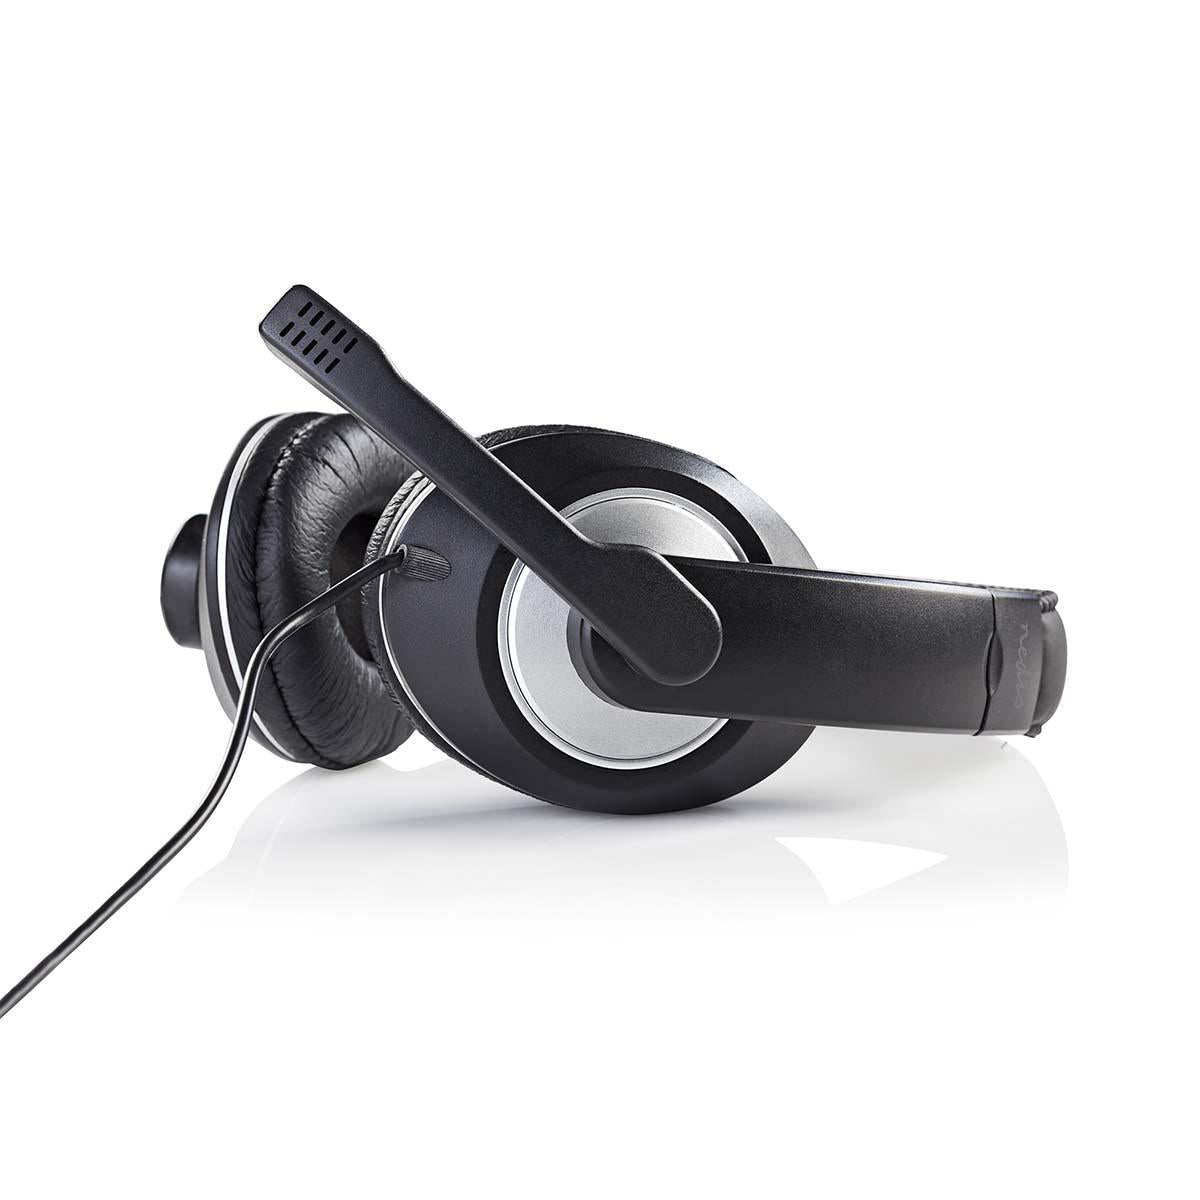 Headset Stereo Sound Mikrofon 3,5mm Klinke Über-Ohr Kopfhörer Schwarz CHST200BK